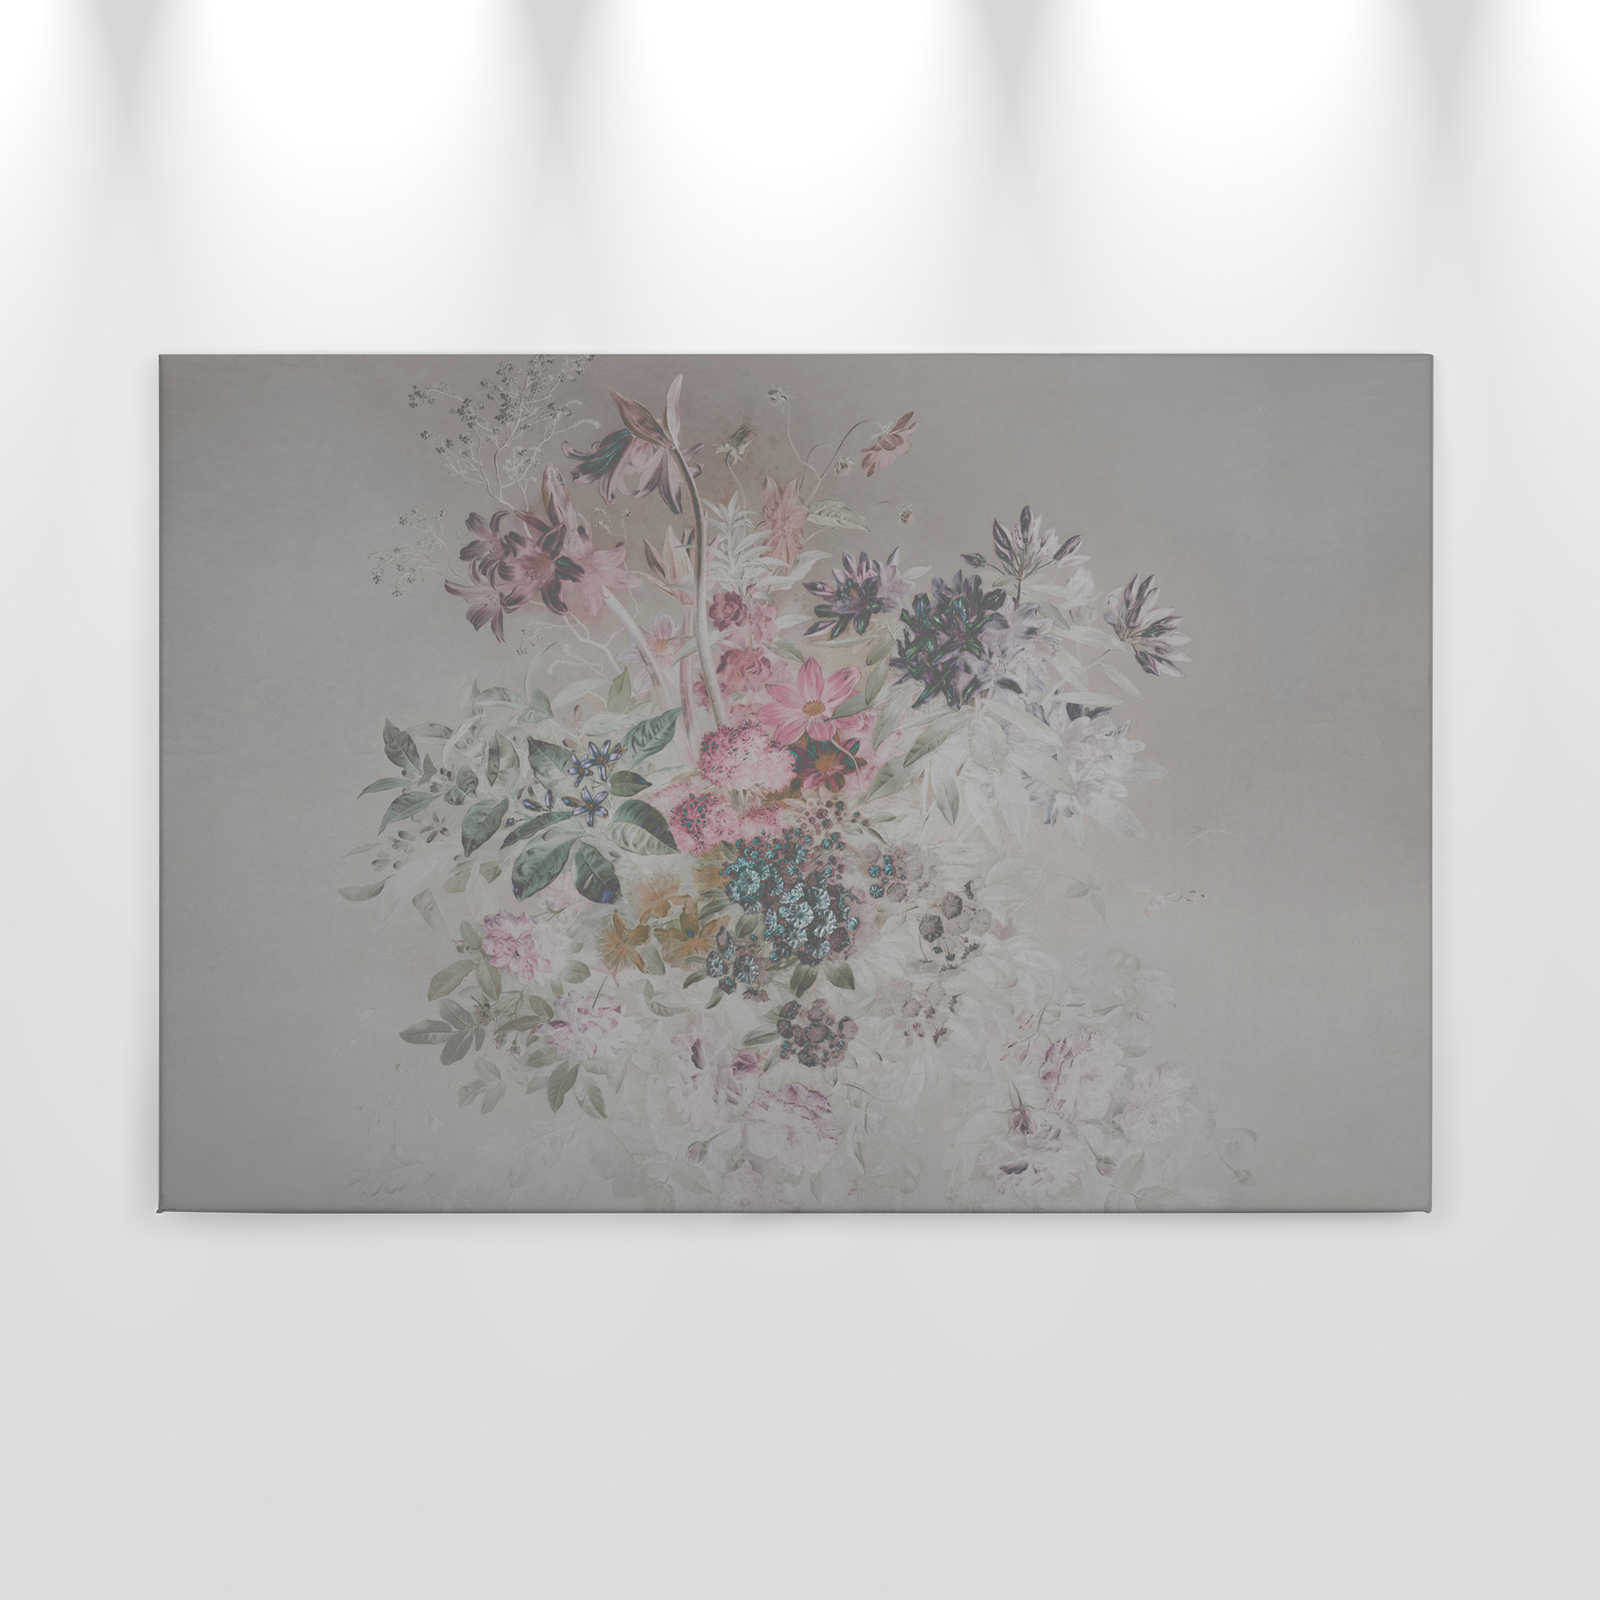             Fleurs toile design pastel | rose, gris - 0,90 m x 0,60 m
        